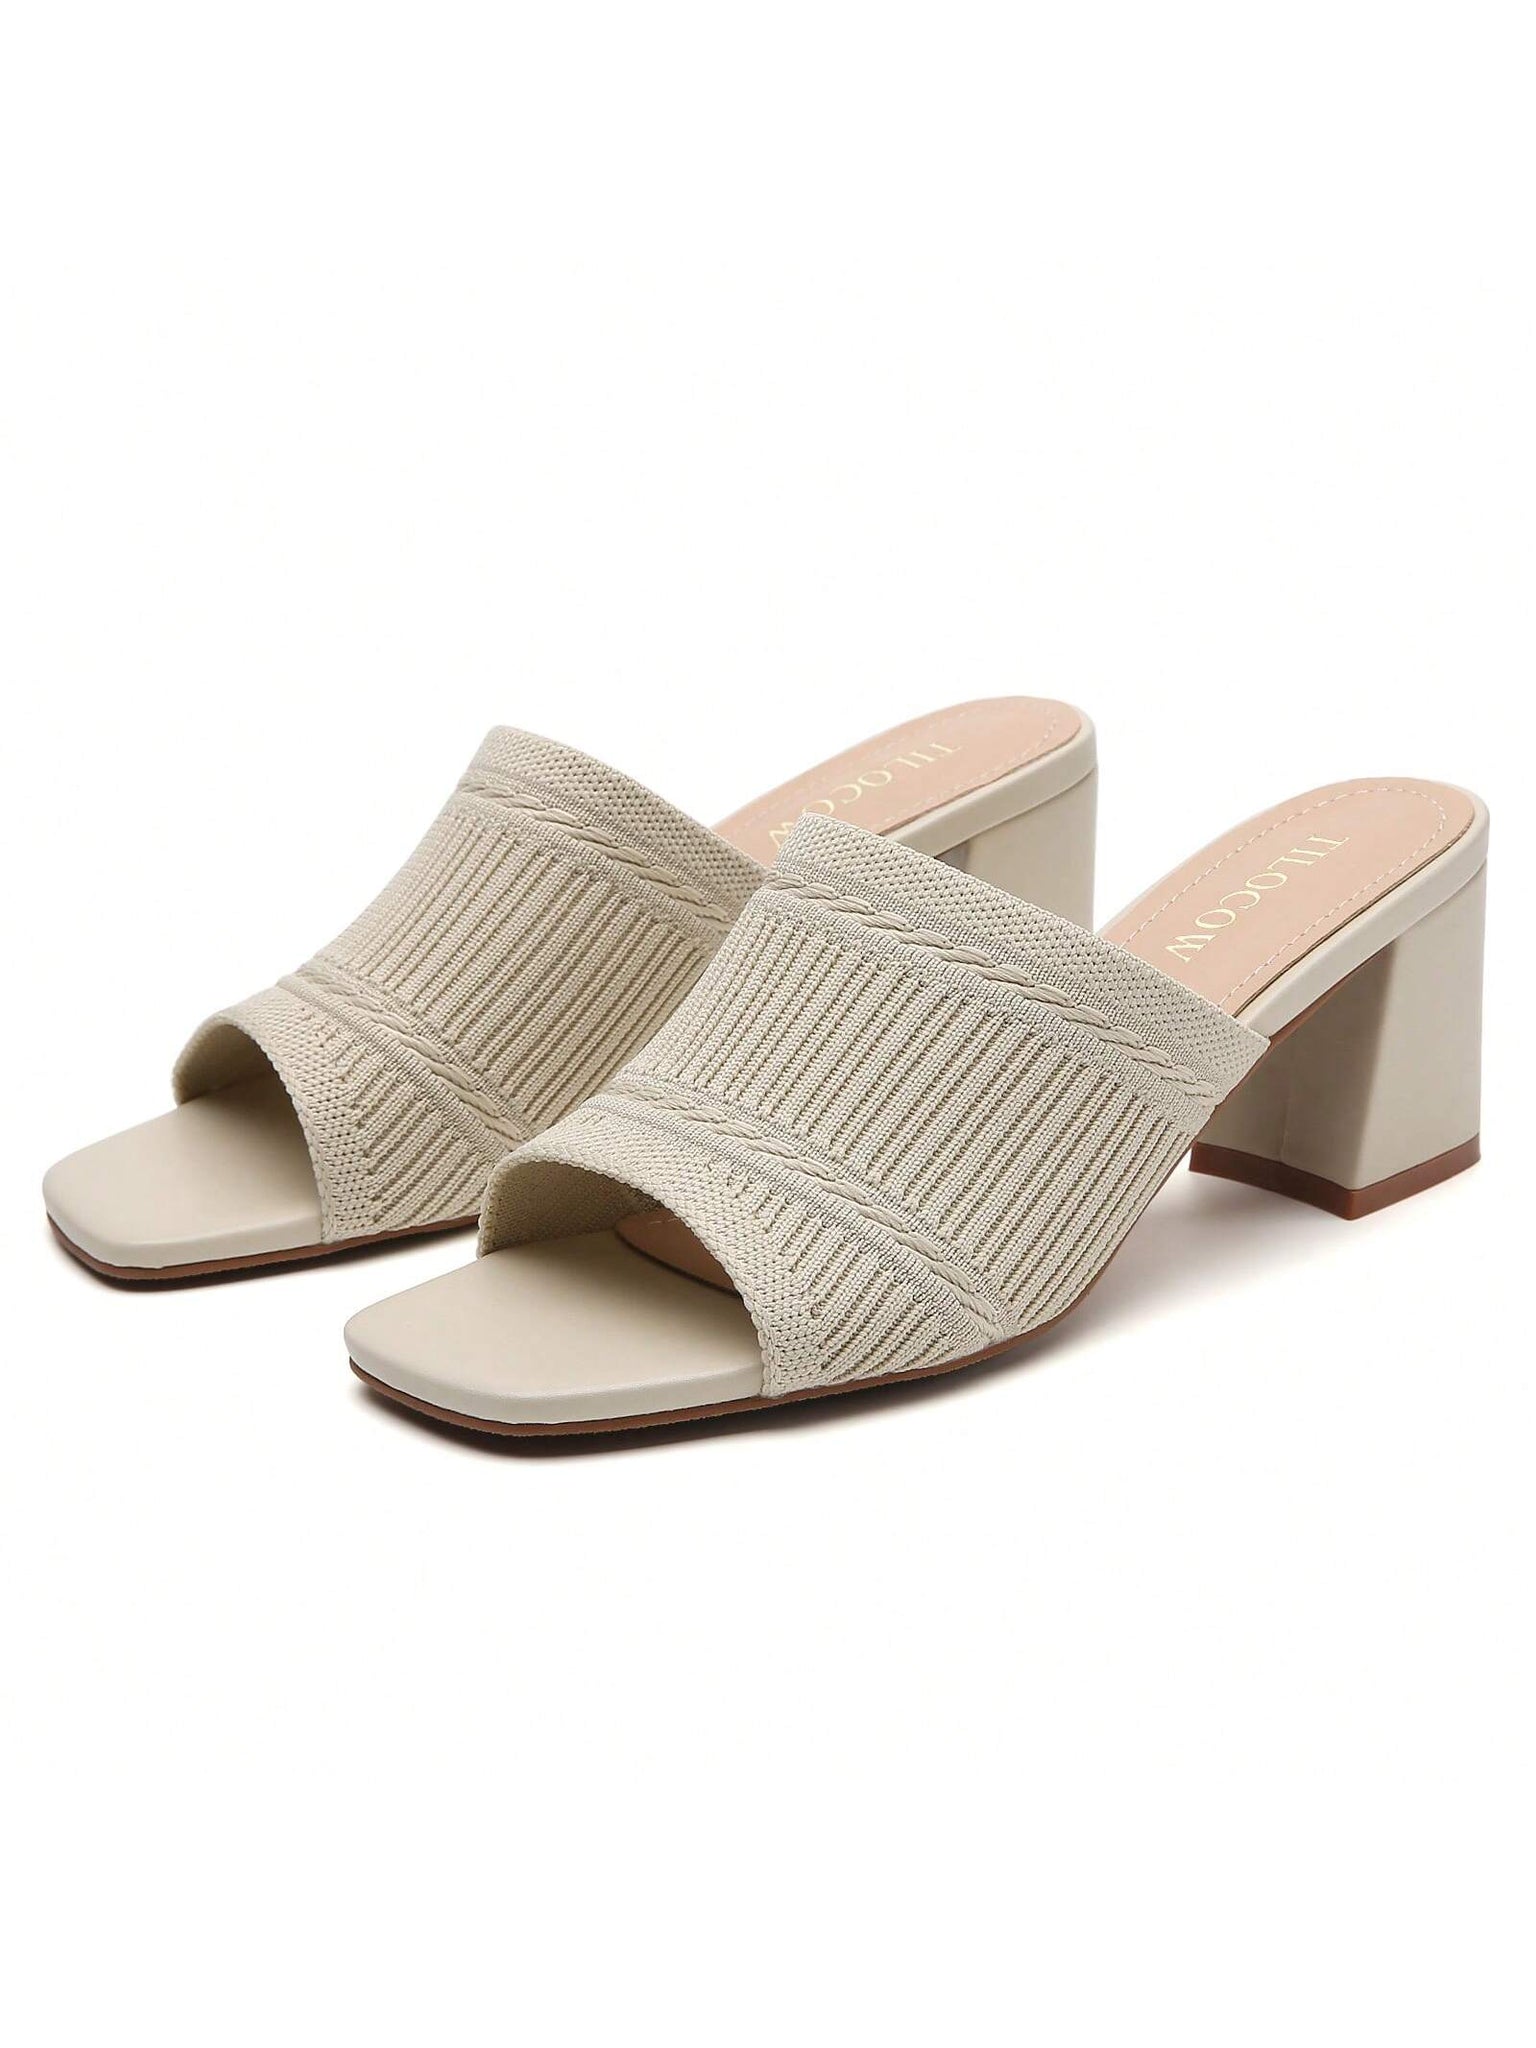 Tilocow Knit Heeled Sandals Chunky Low Block Heel Mules For Women Square Open Toe Heels Slip On Breathable Slides Sandal-Beige-6